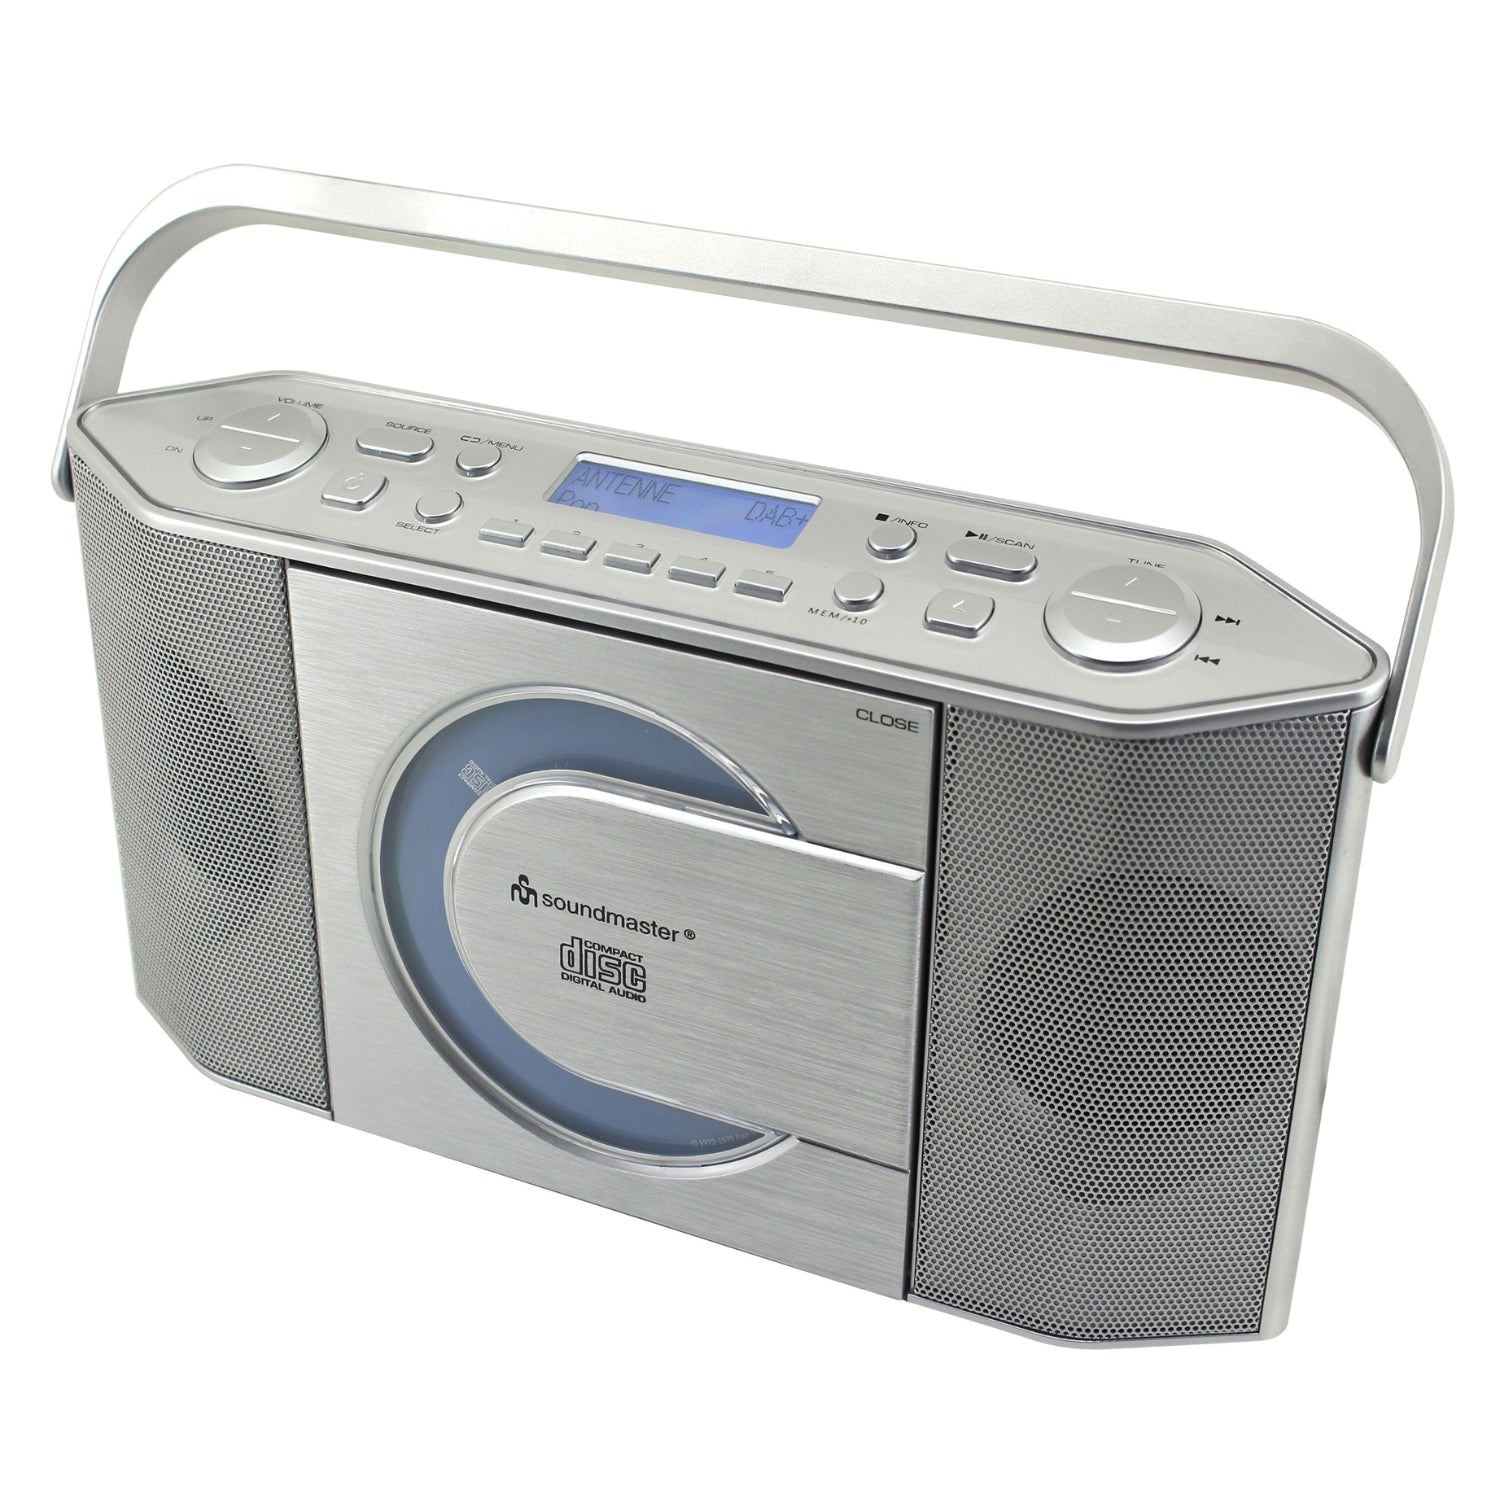 Soundmaster RCD1770SI Digitalradio Radiorecorder DAB+ mit USB und CD-Player MP3 Kopfhörer Uhr